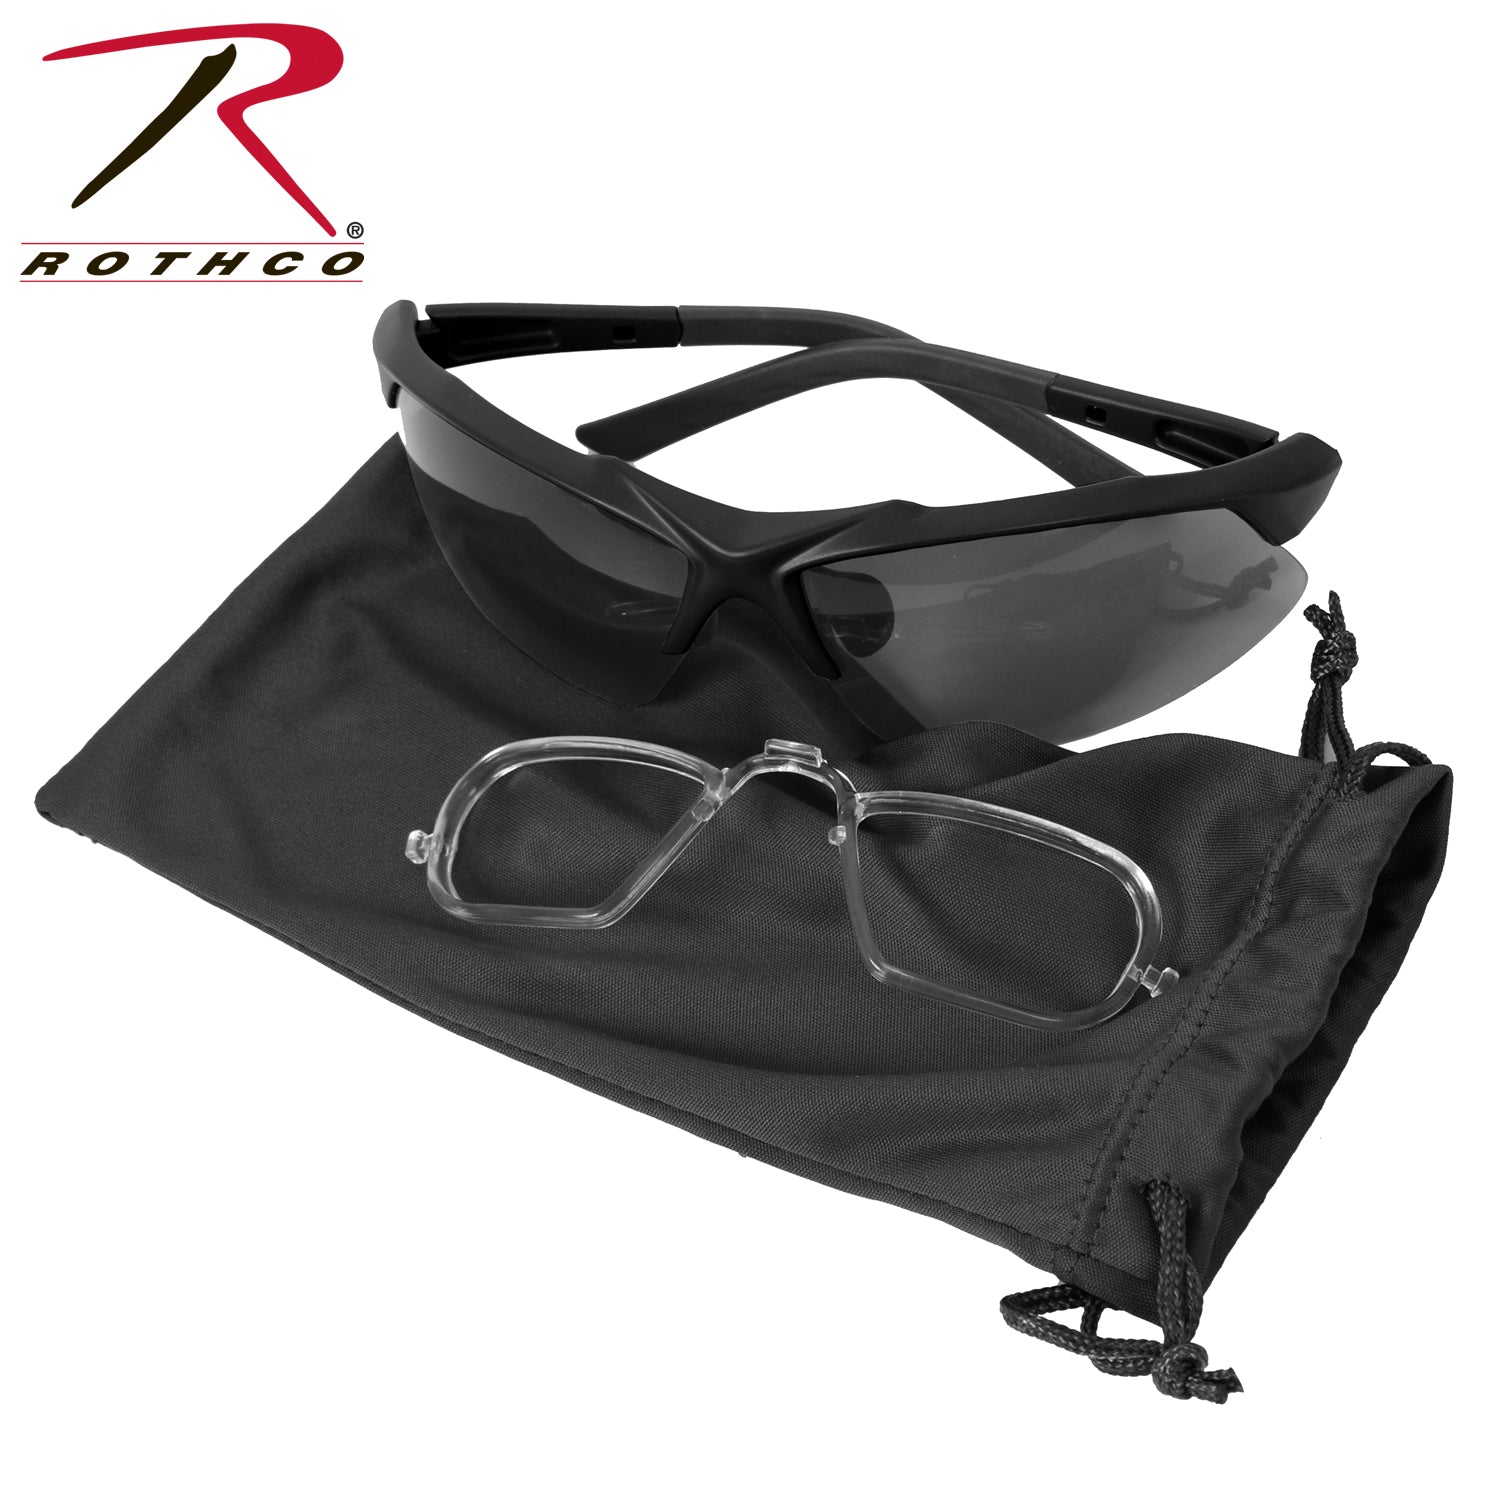 Rothco Tactical Eyewear Kit - Tactical Choice Plus